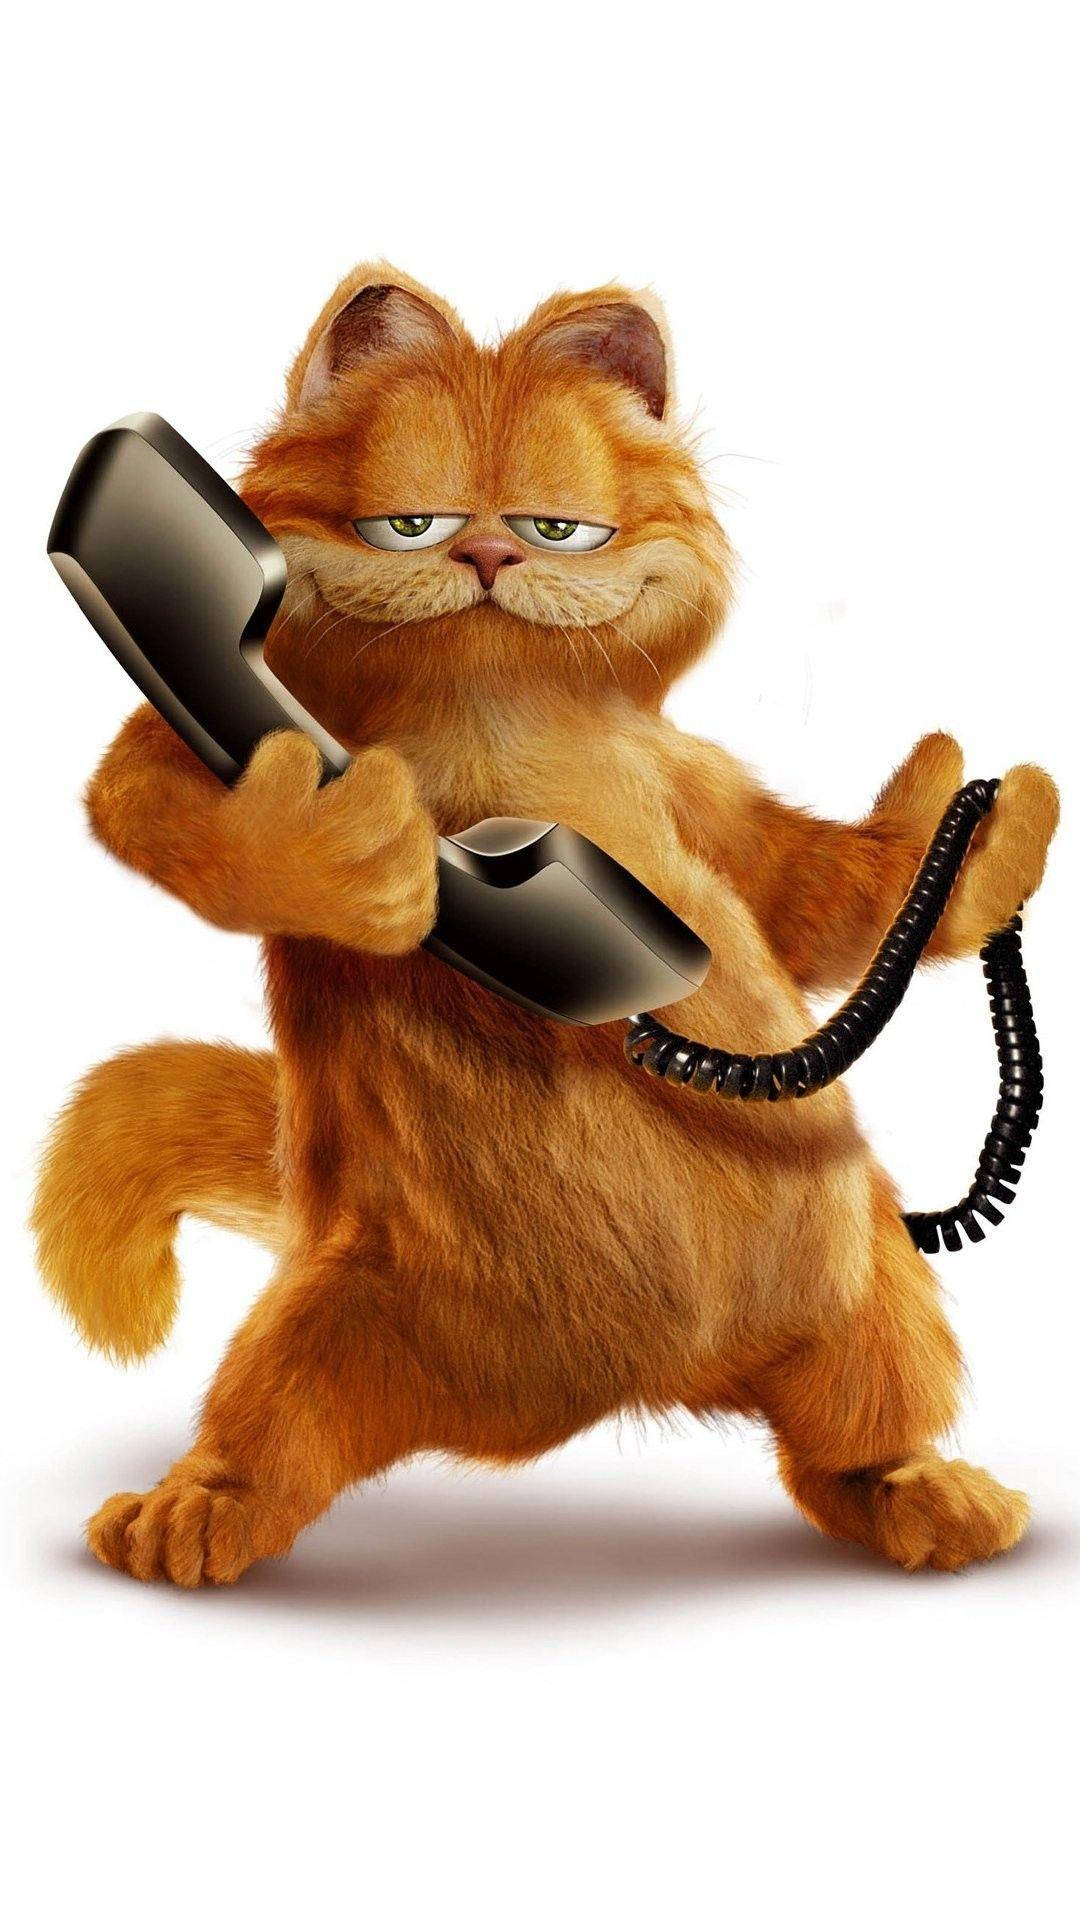 Telephone Call With Garfield